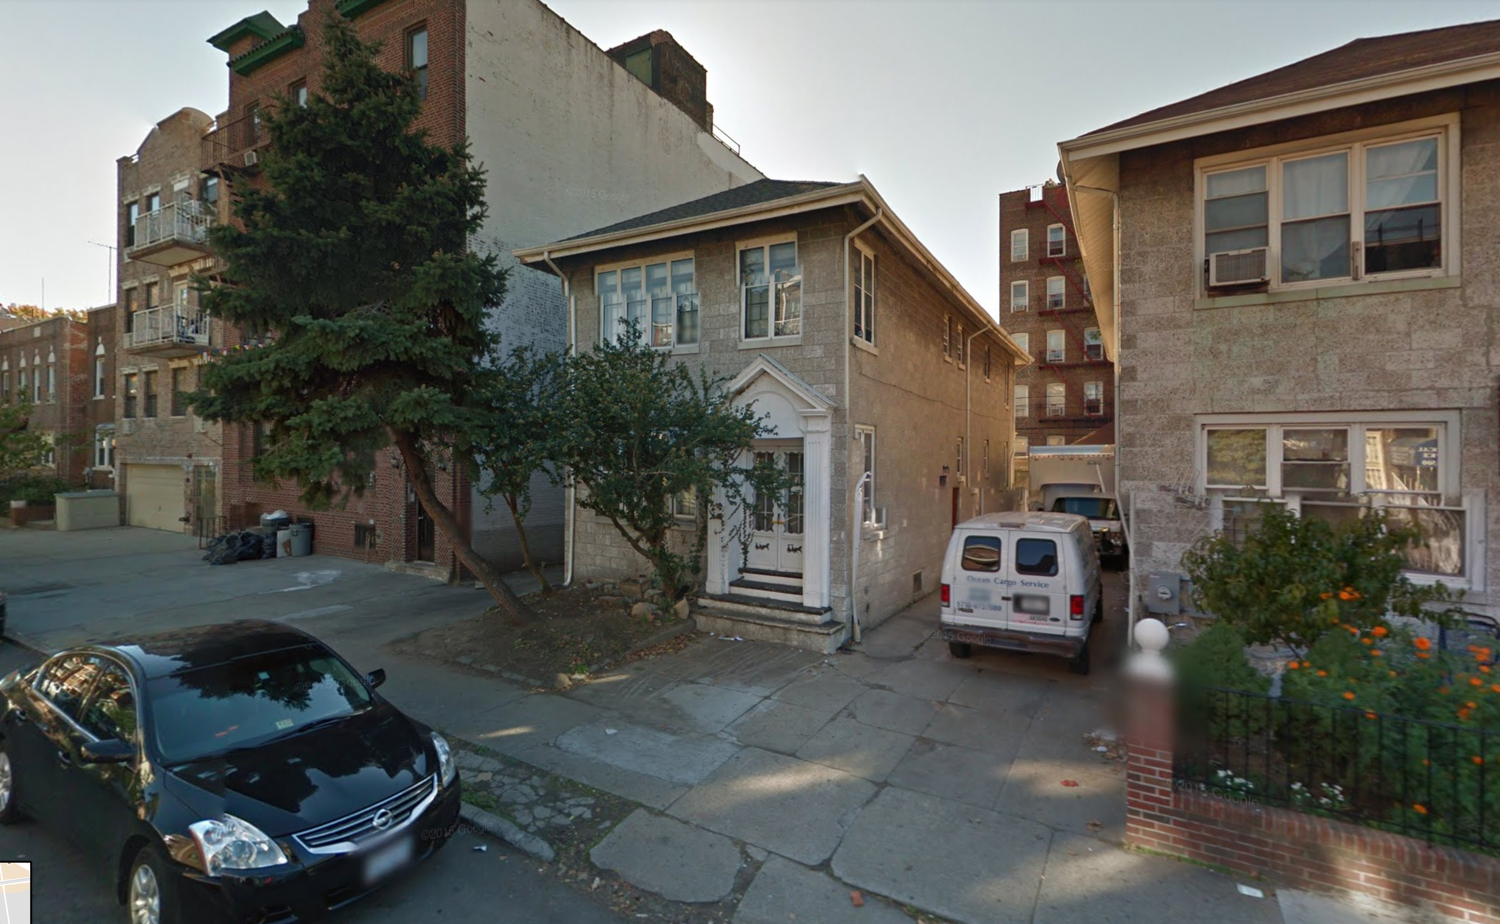 40-06 68th Street, via Google Maps